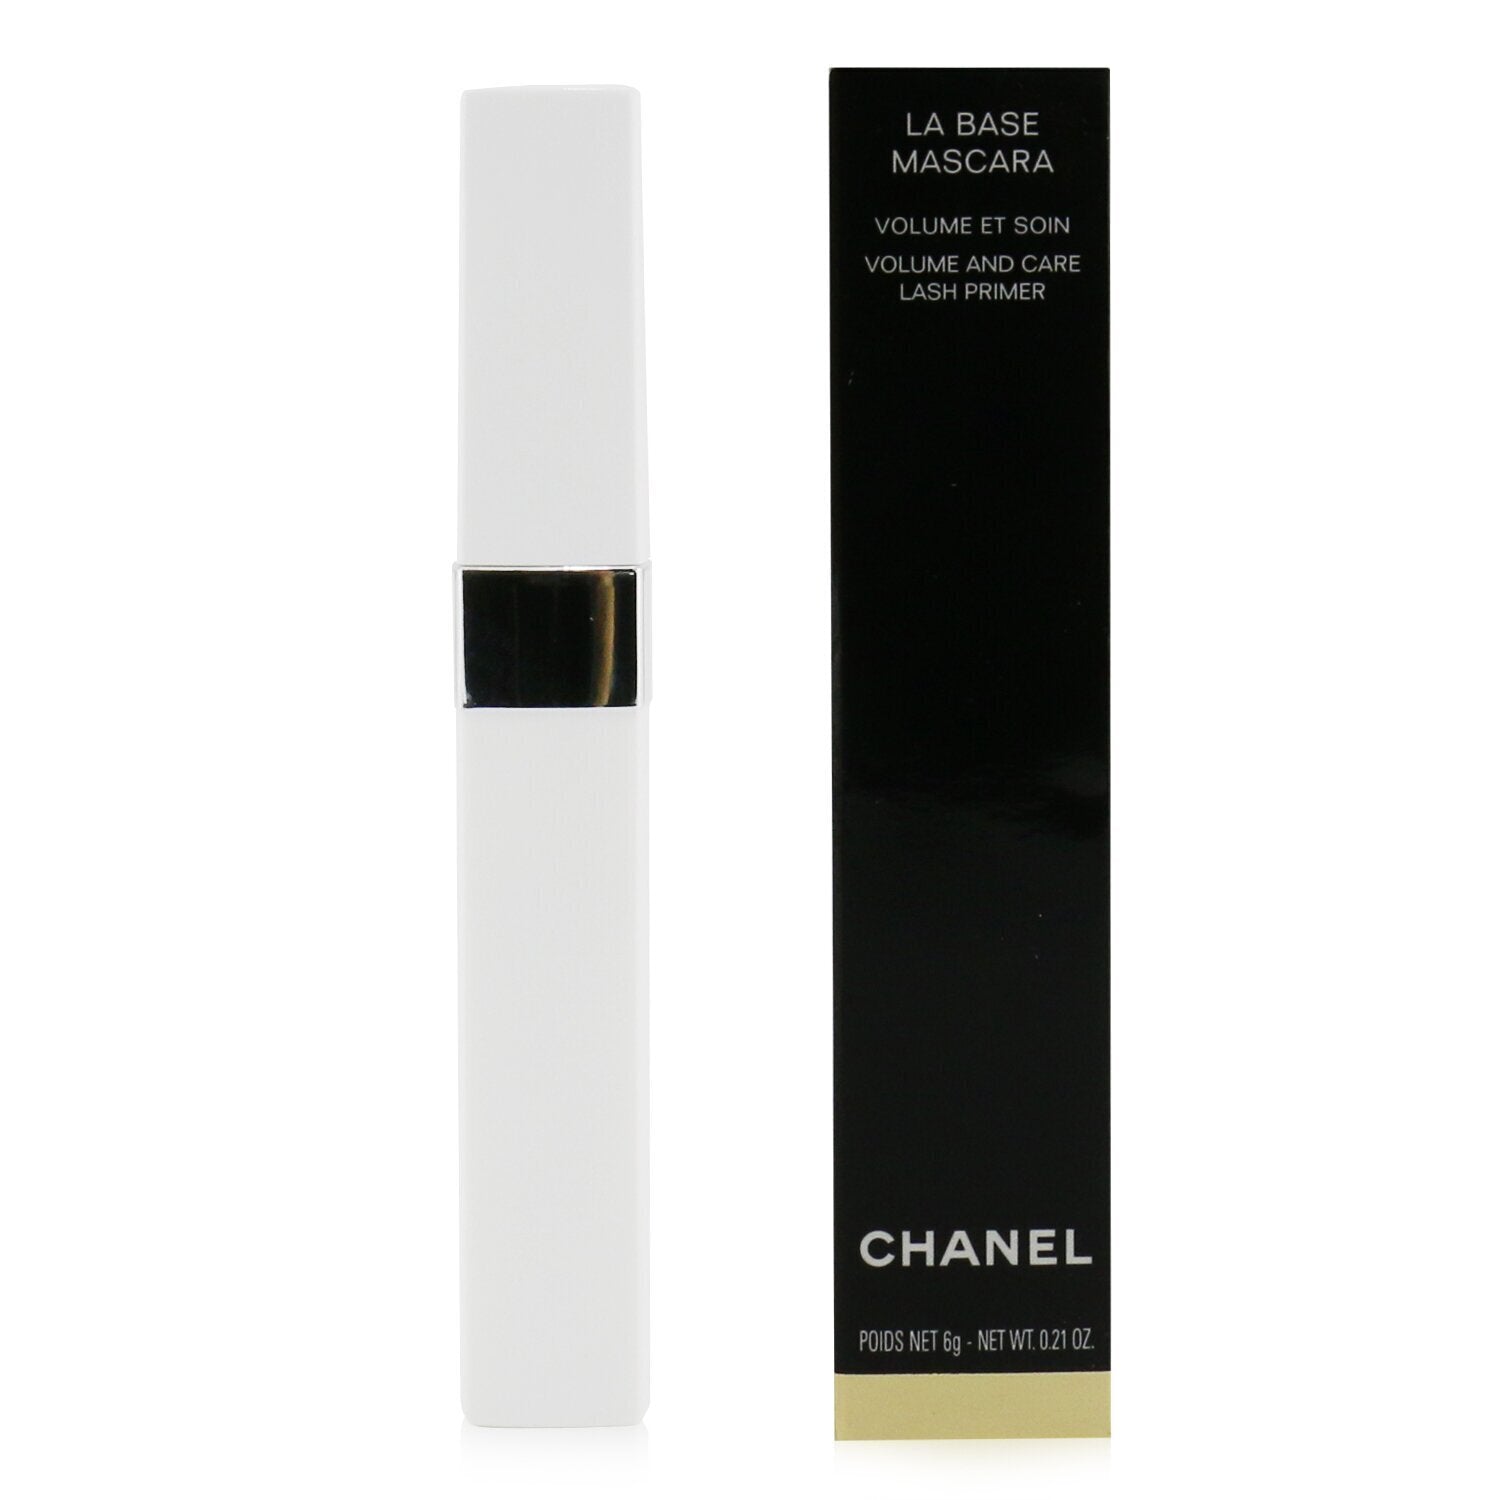 Chanel - La Base Mascara Volume And Care Lash Primer (Make Up & Cosmetics)  Products